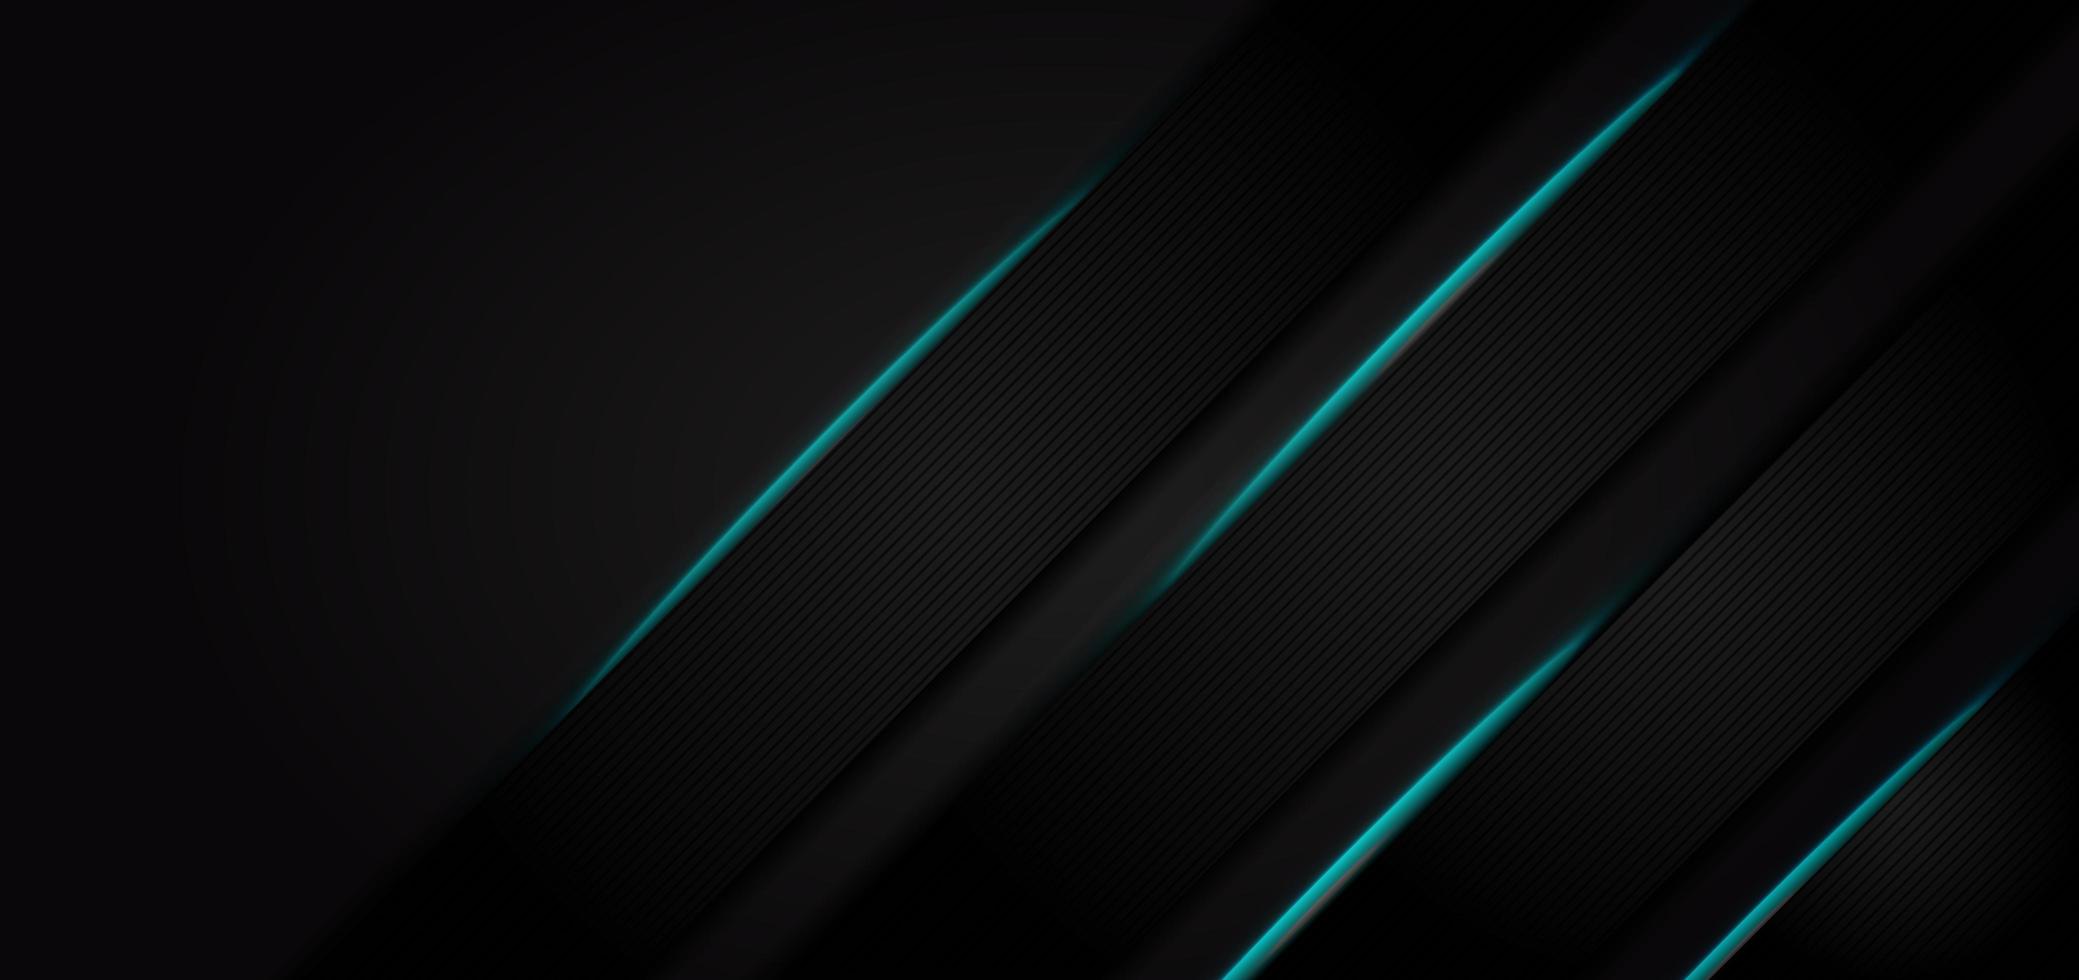 moderne zwarte strepen met blauw neonlicht vector